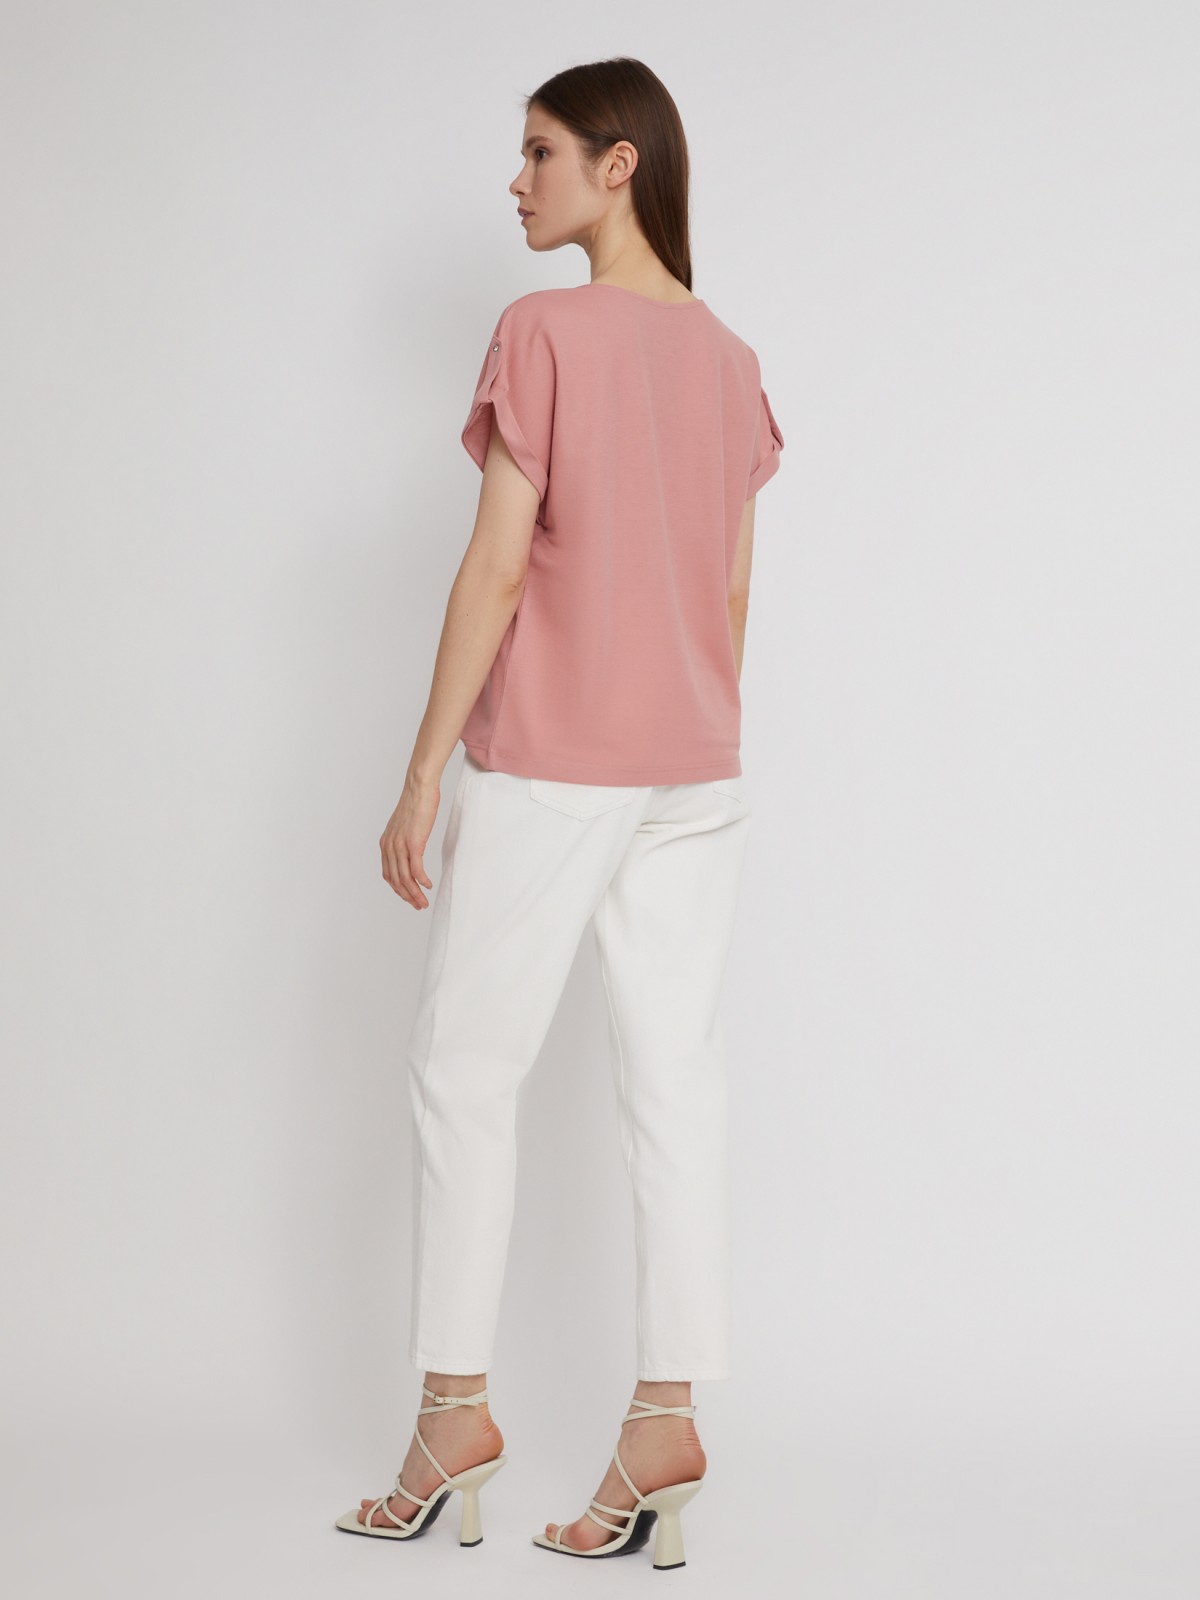 Блузка-футболка с коротким рукавом zolla 023213259023, цвет розовый, размер XS - фото 6